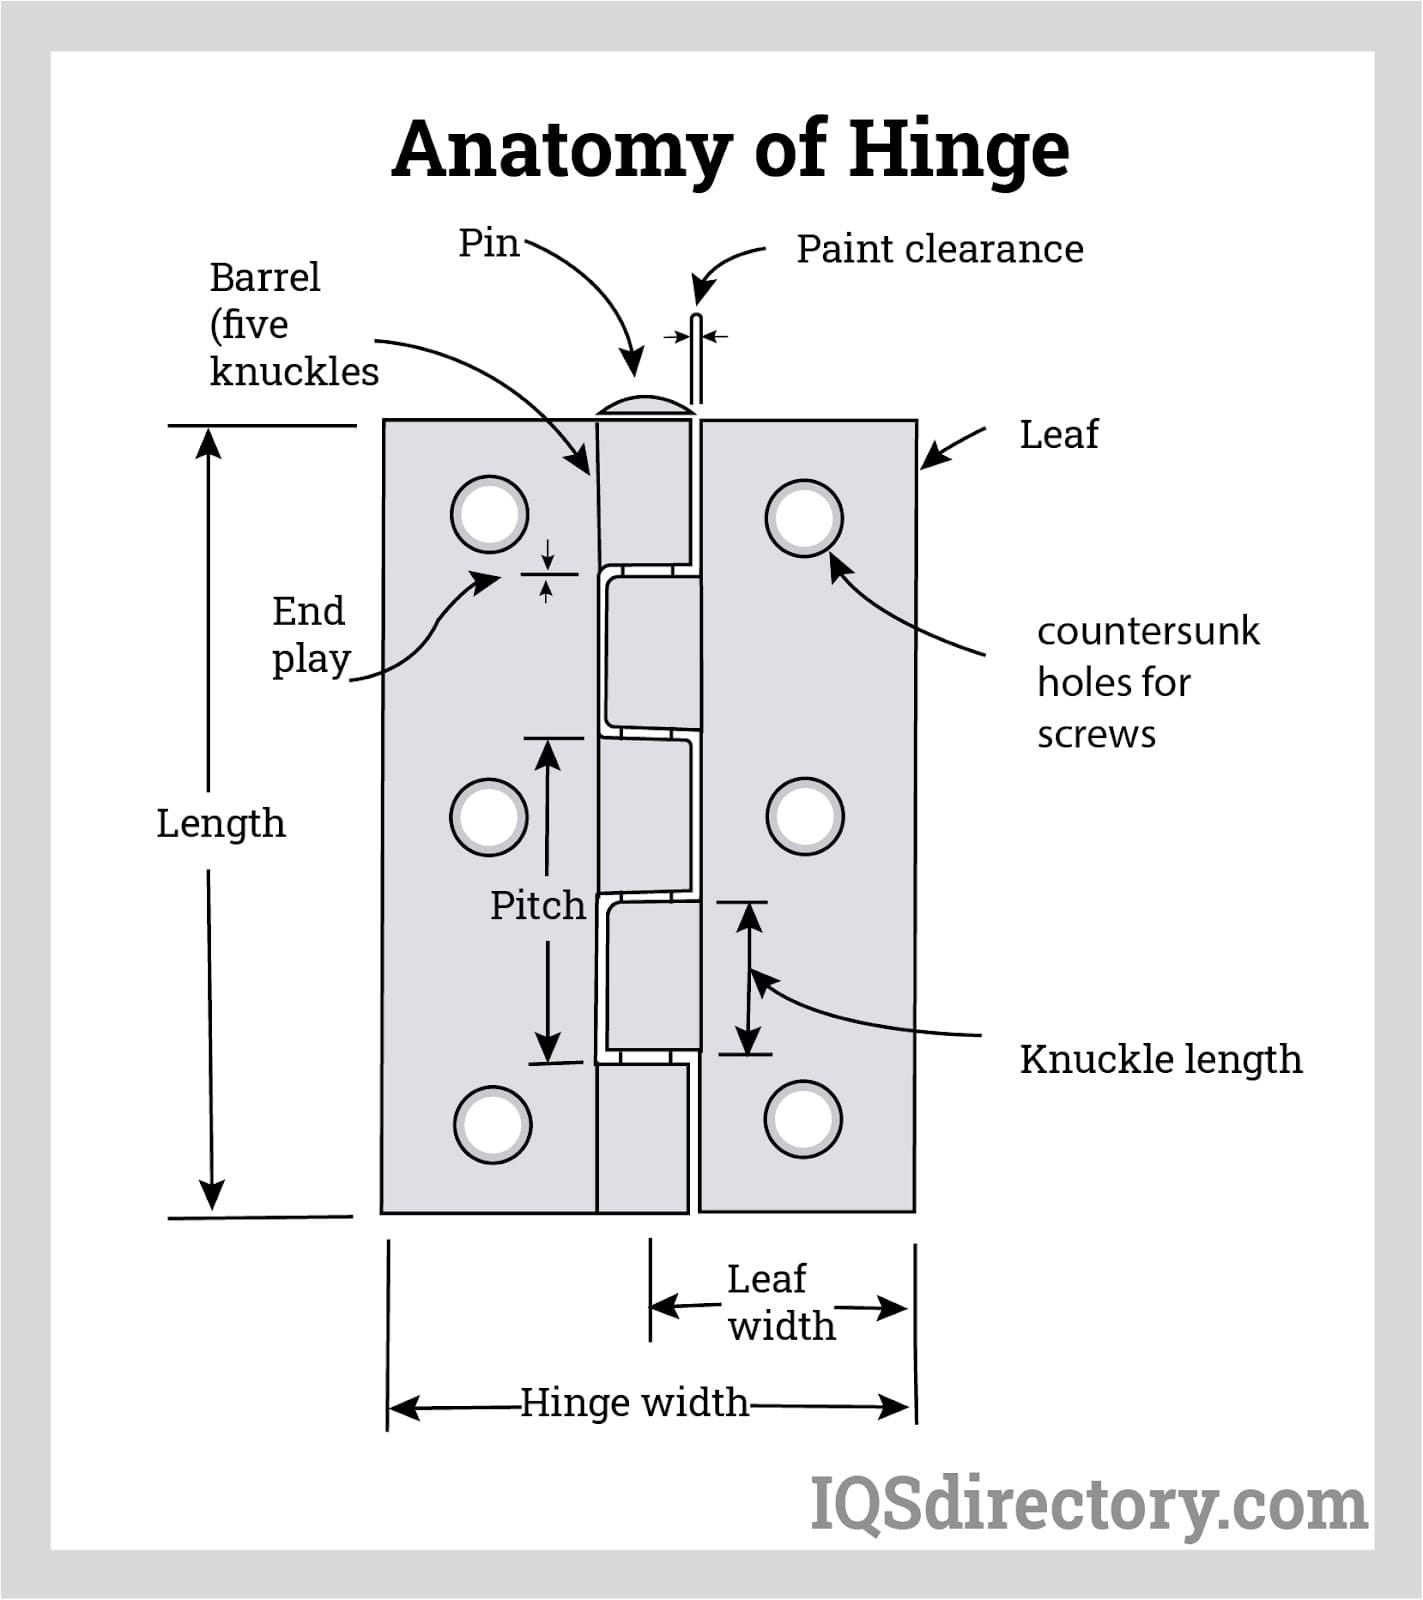 Anatomy of the hinge